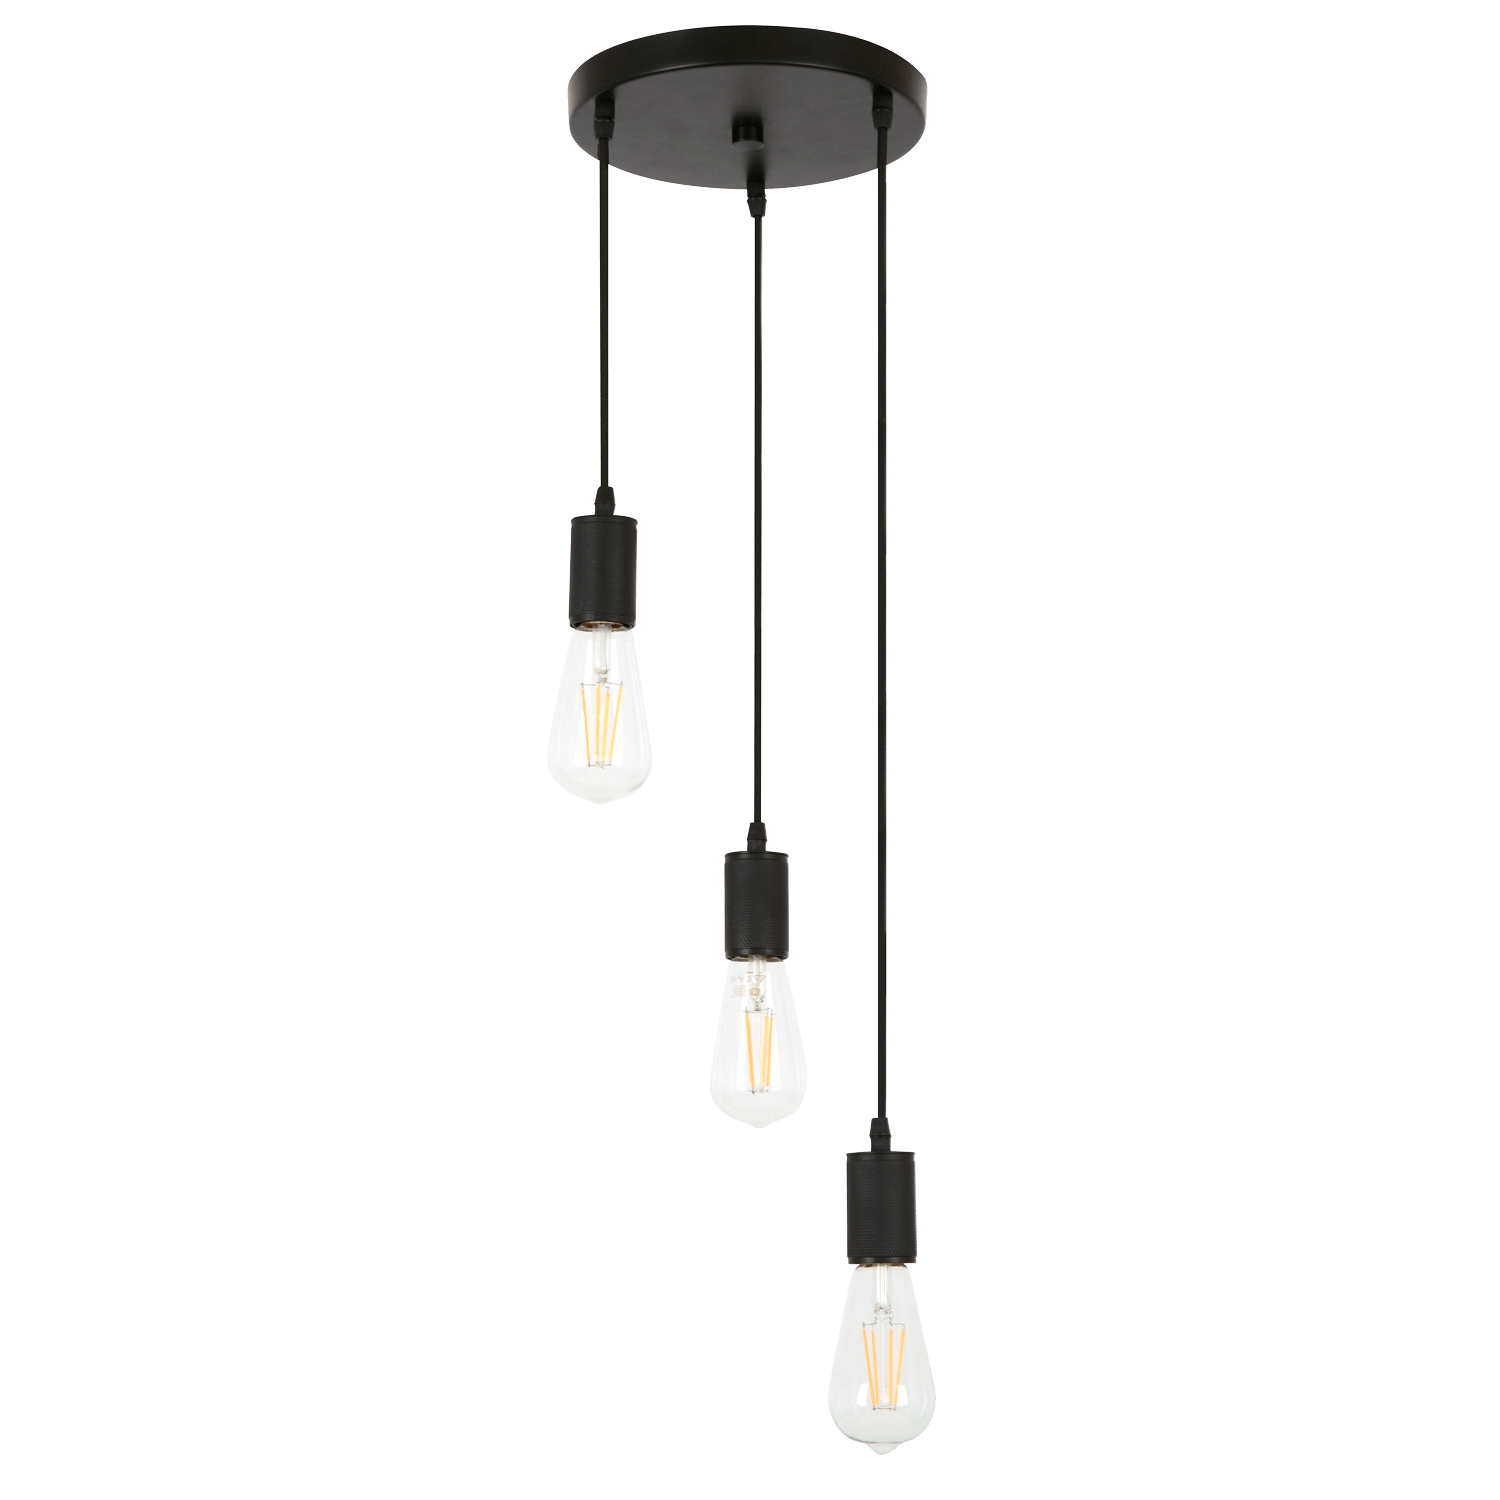 Reece 3 light black pendant light